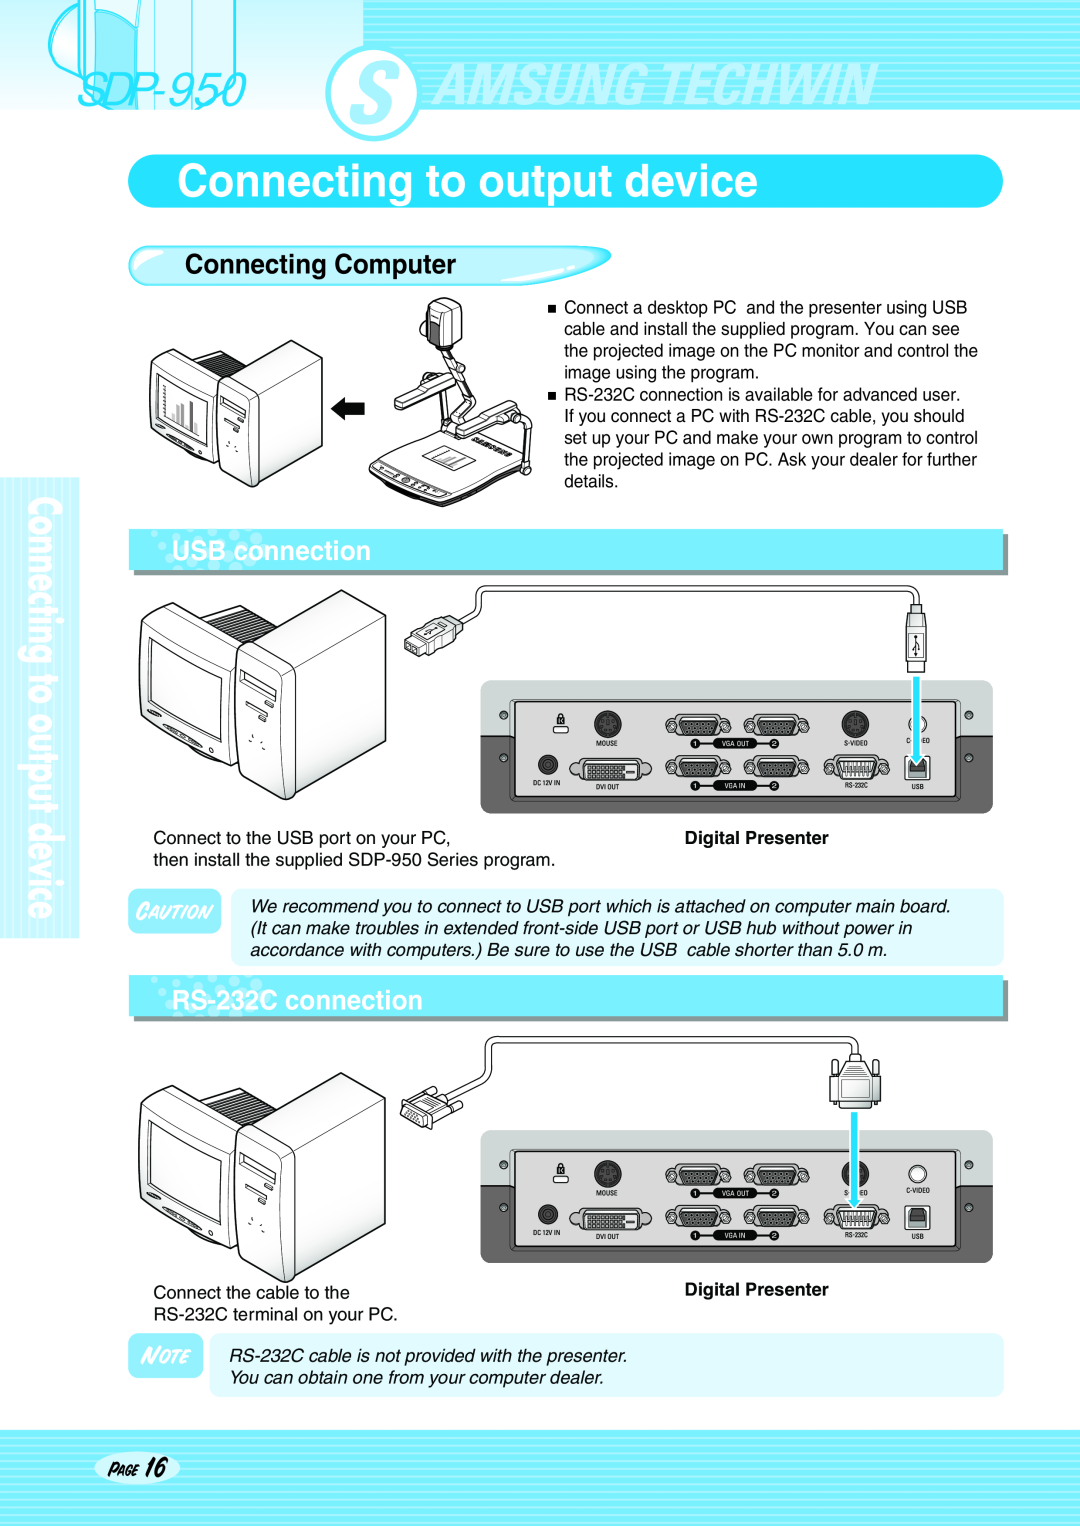 Altec Lansing SDP-950STA, SDP-950DXA Connecting Computer, USBconnection, RS-232C connection, Connecting to output device 